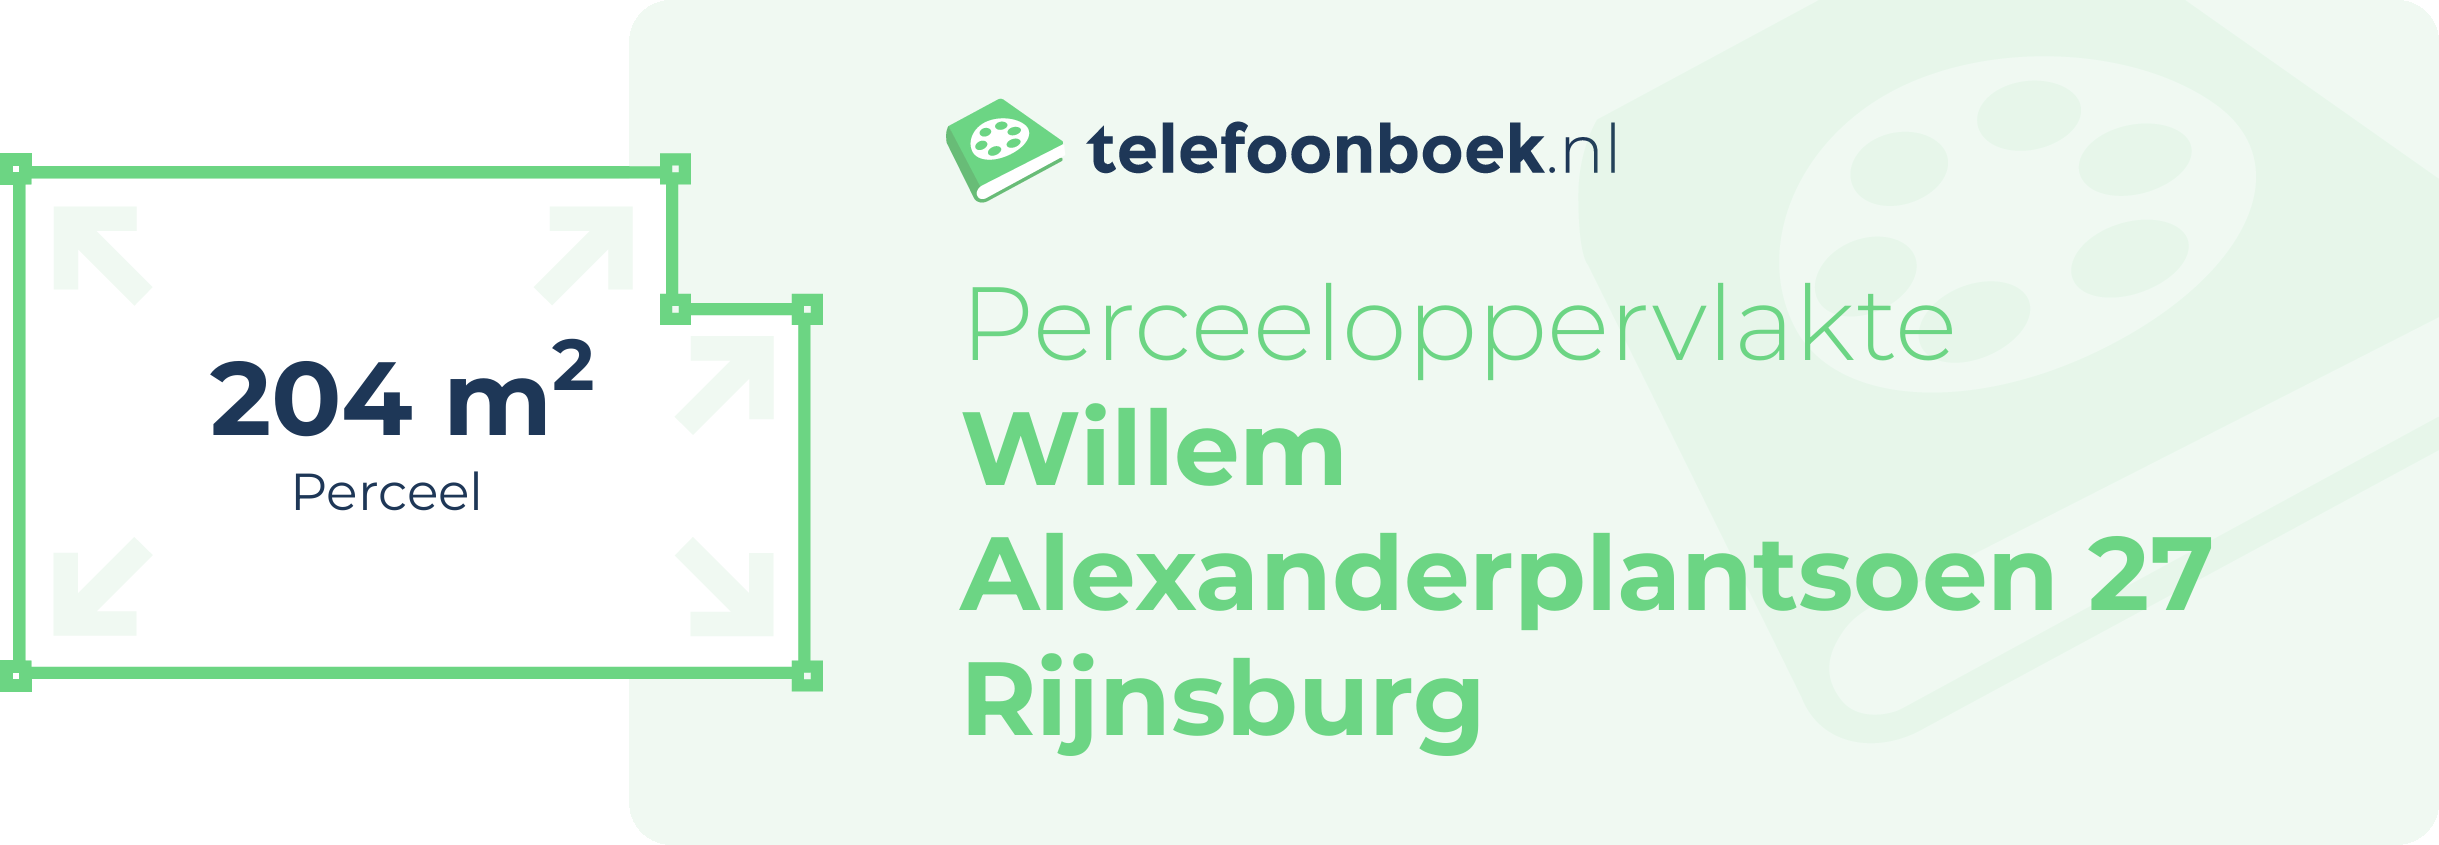 Perceeloppervlakte Willem Alexanderplantsoen 27 Rijnsburg